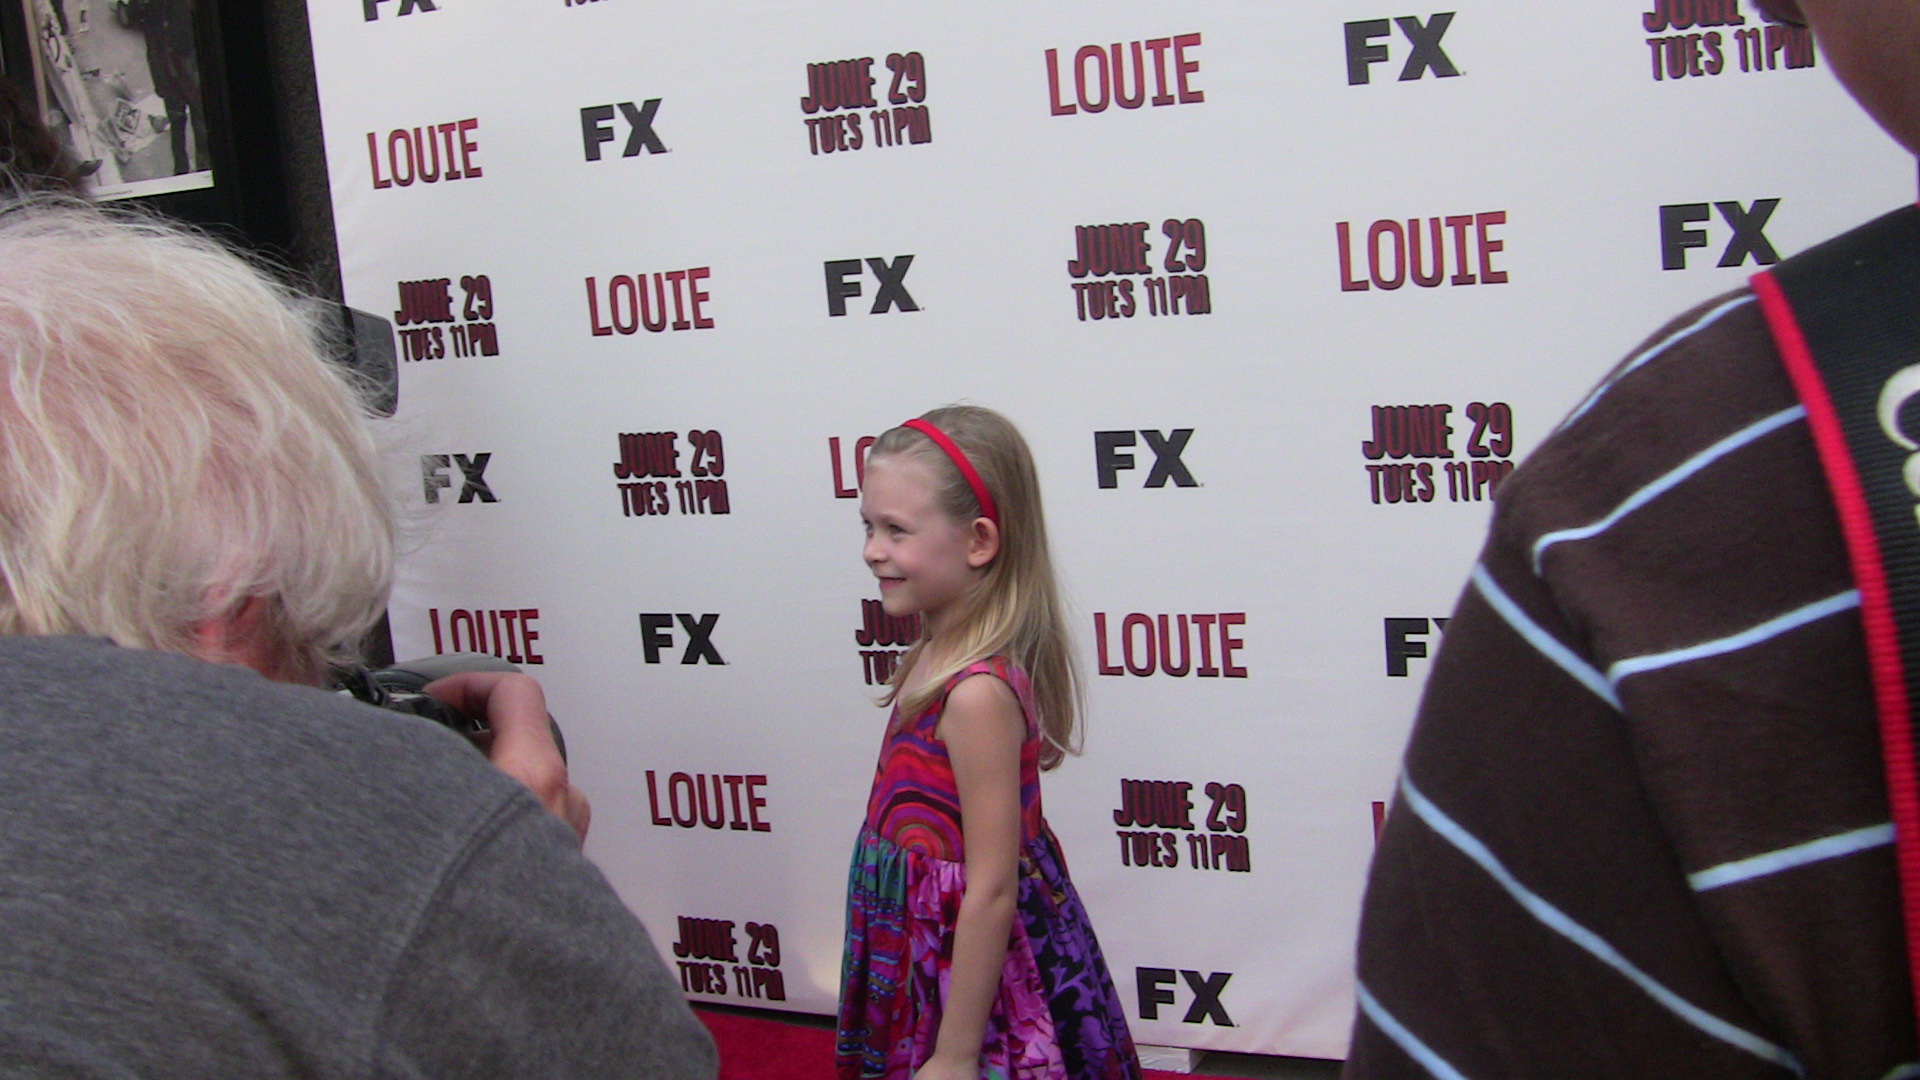 Ursula Parker at the premiere of Louie.